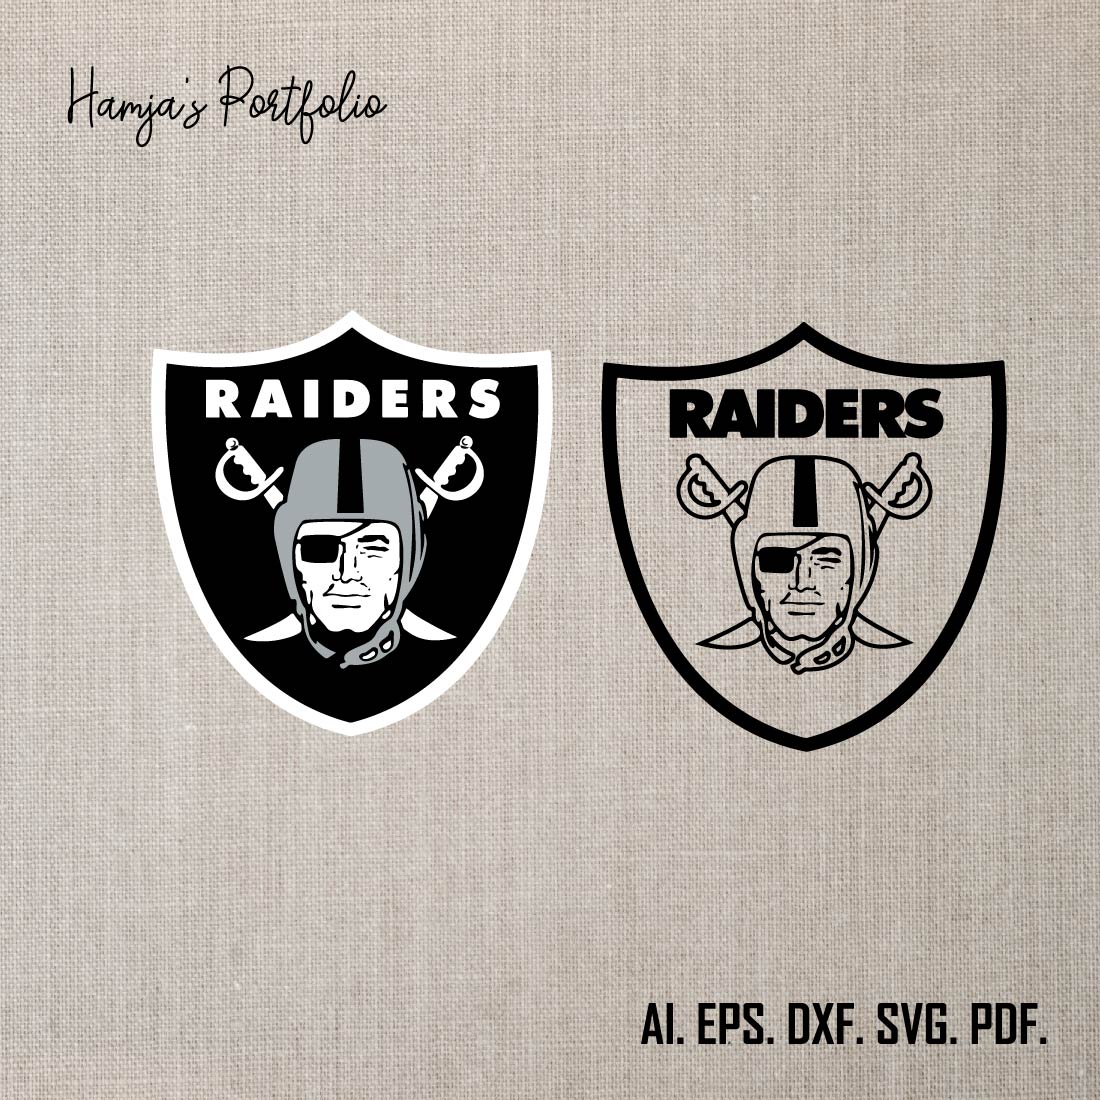 Las Vegas Raiderrs Football SVG ll Oakland Raiders SVG ll Sport vector logo set preview image.